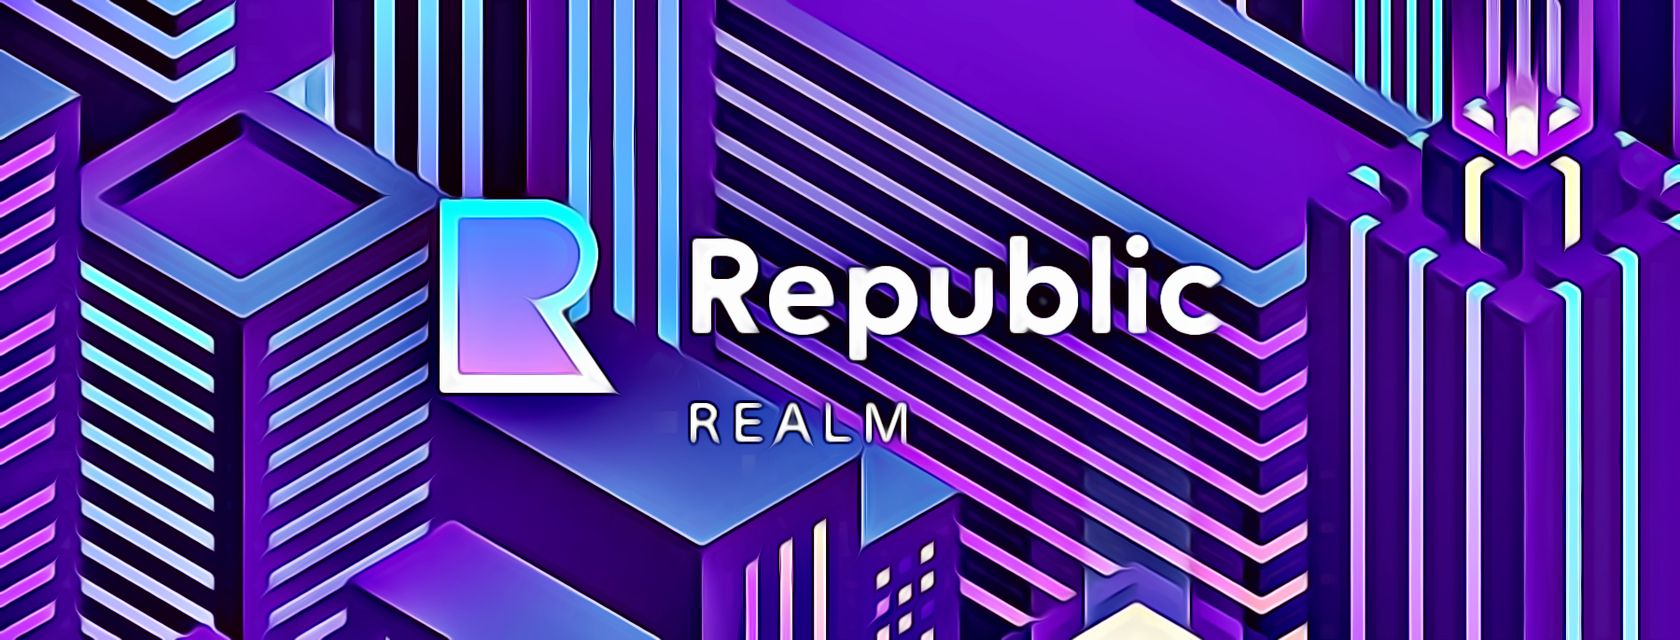 Republic Realm.jpeg